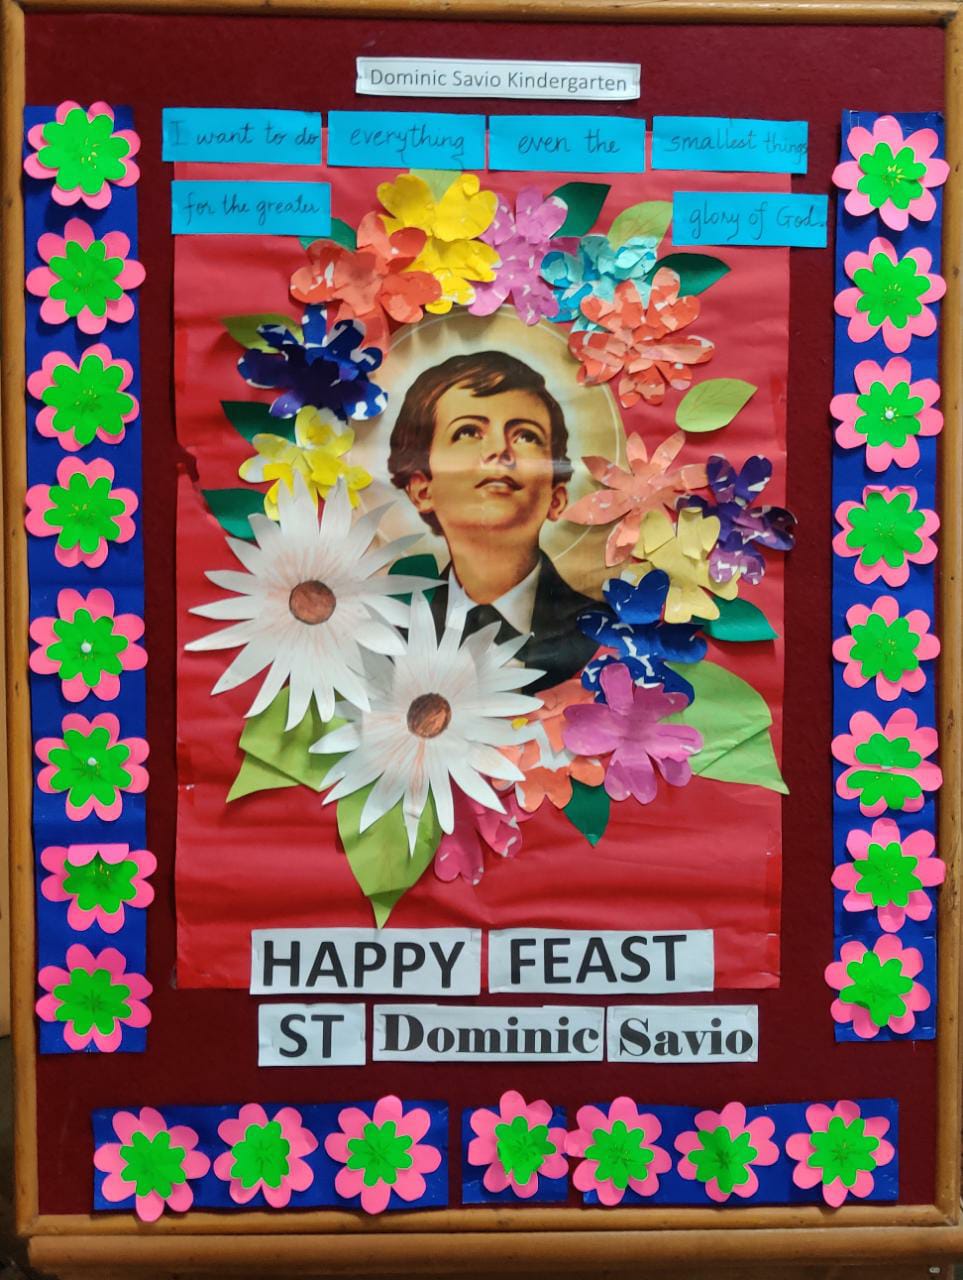 Feast of St. Dominic Savio